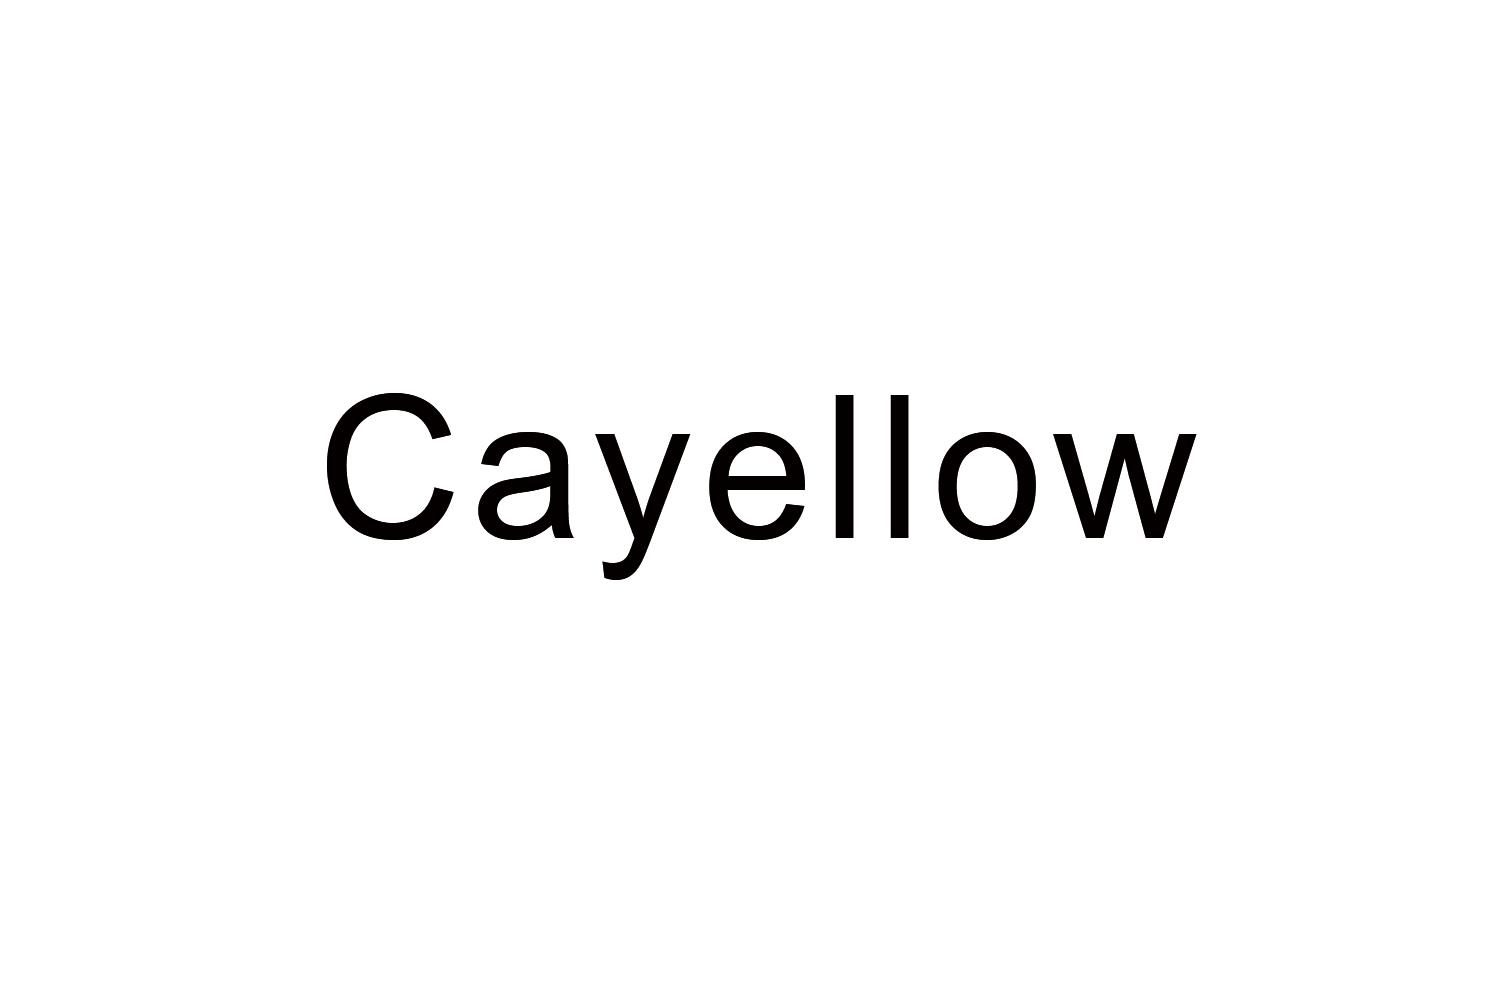 Cayellow